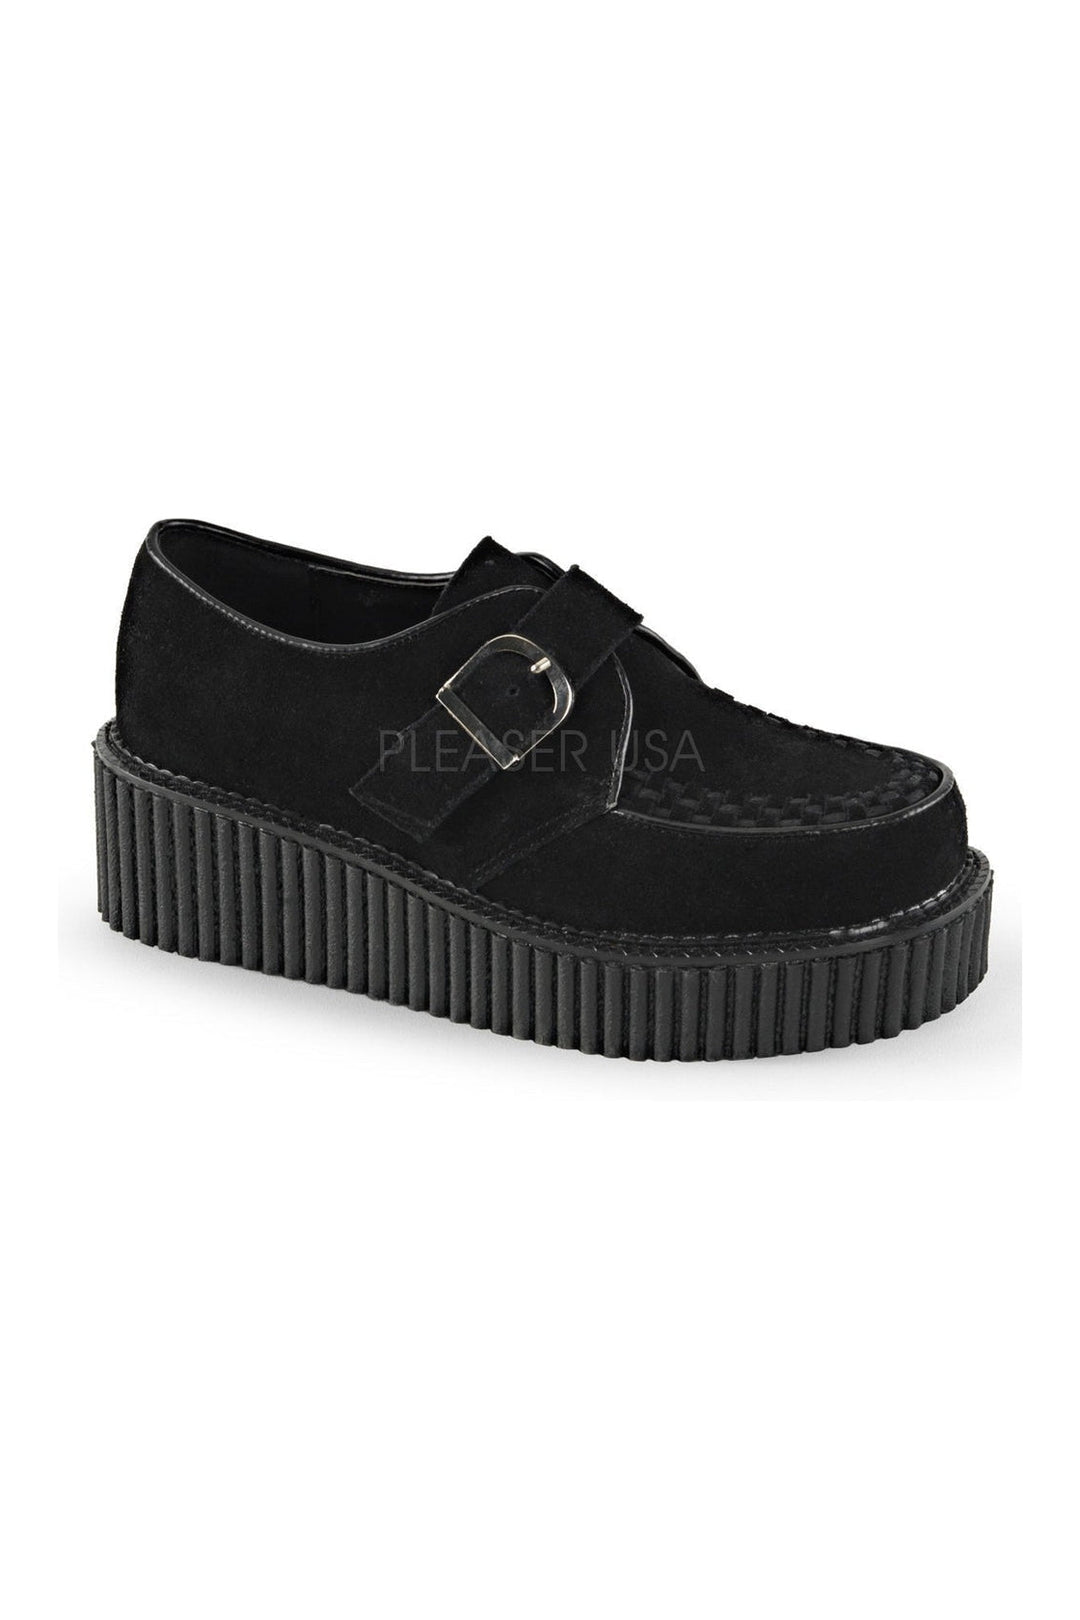 CREEPER-118 Demonia Shoe | Black Fabric-Demonia-Black-Creepers-SEXYSHOES.COM